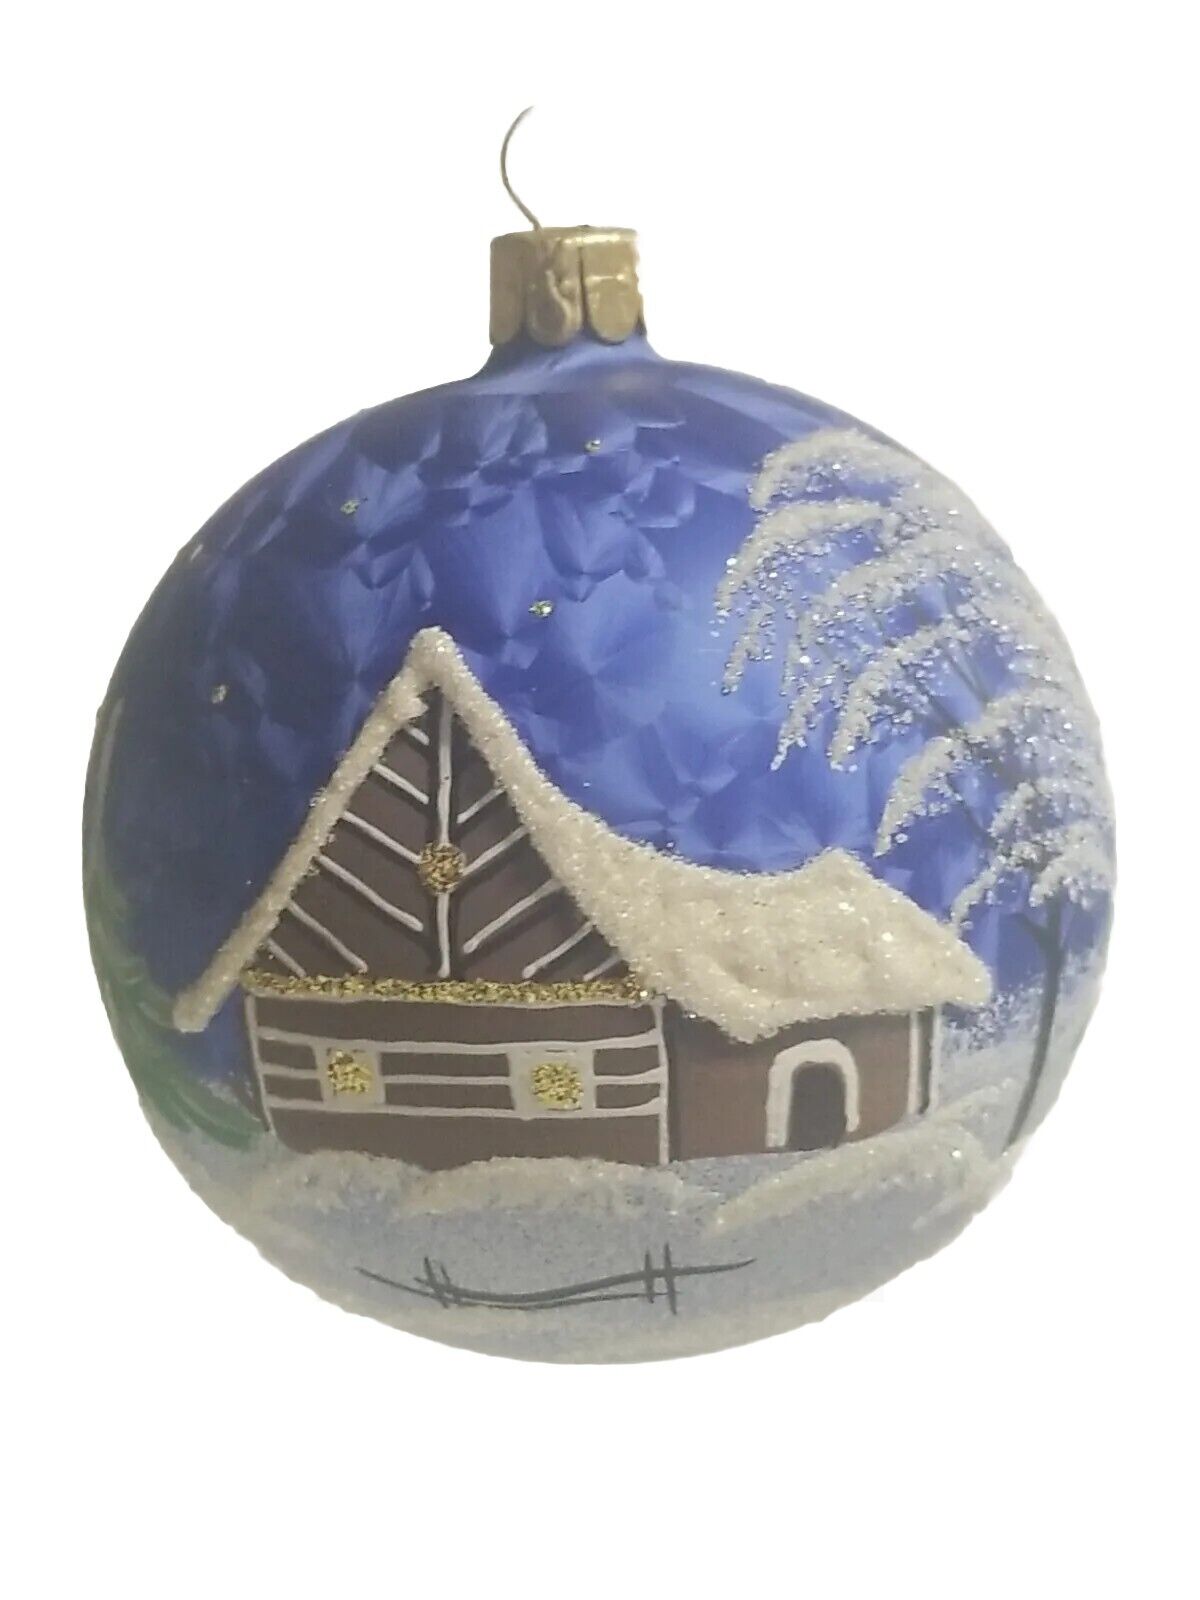 6 Vintage Glass Ball Christmas Ornament Hand Painted Snowy House & Church Scene 